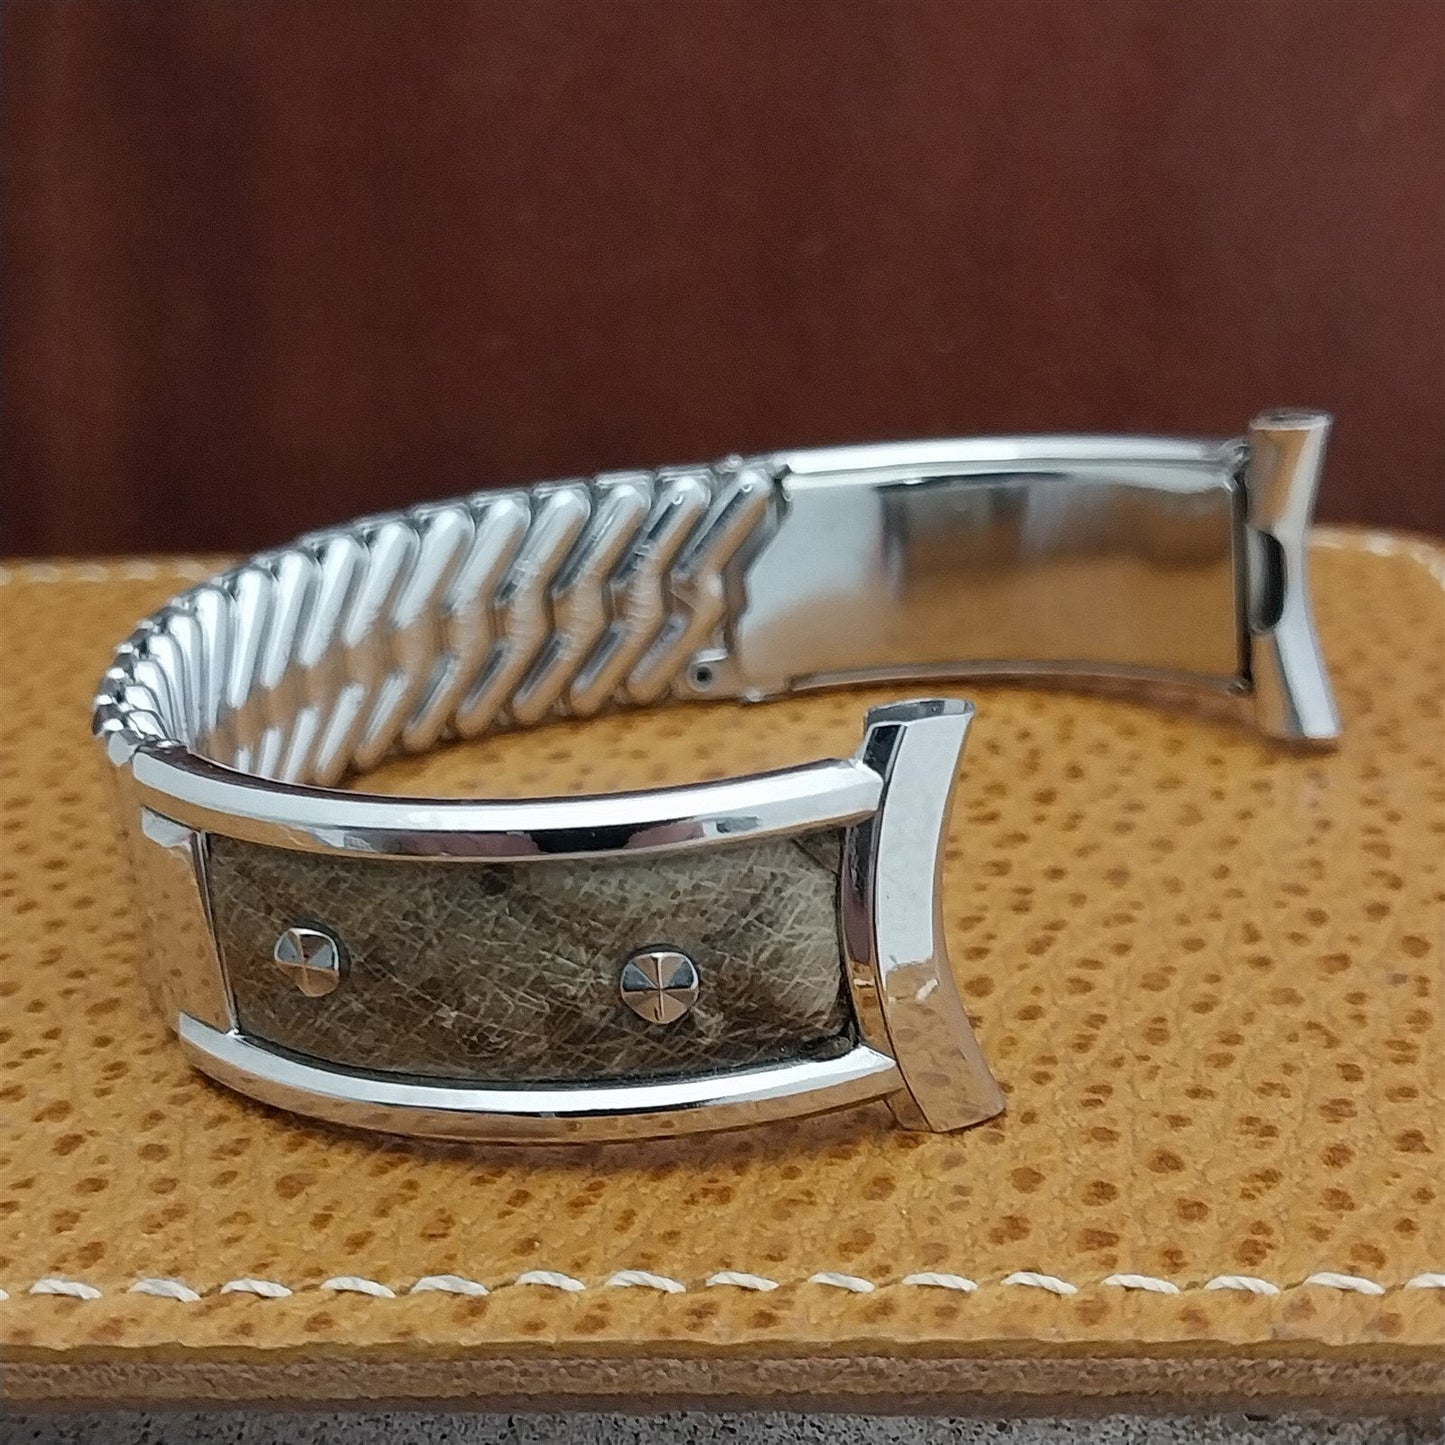 19mm 18mm 16mm Kreisler White Gold-Filled & Leather nos 1960s Vintage Watch Band